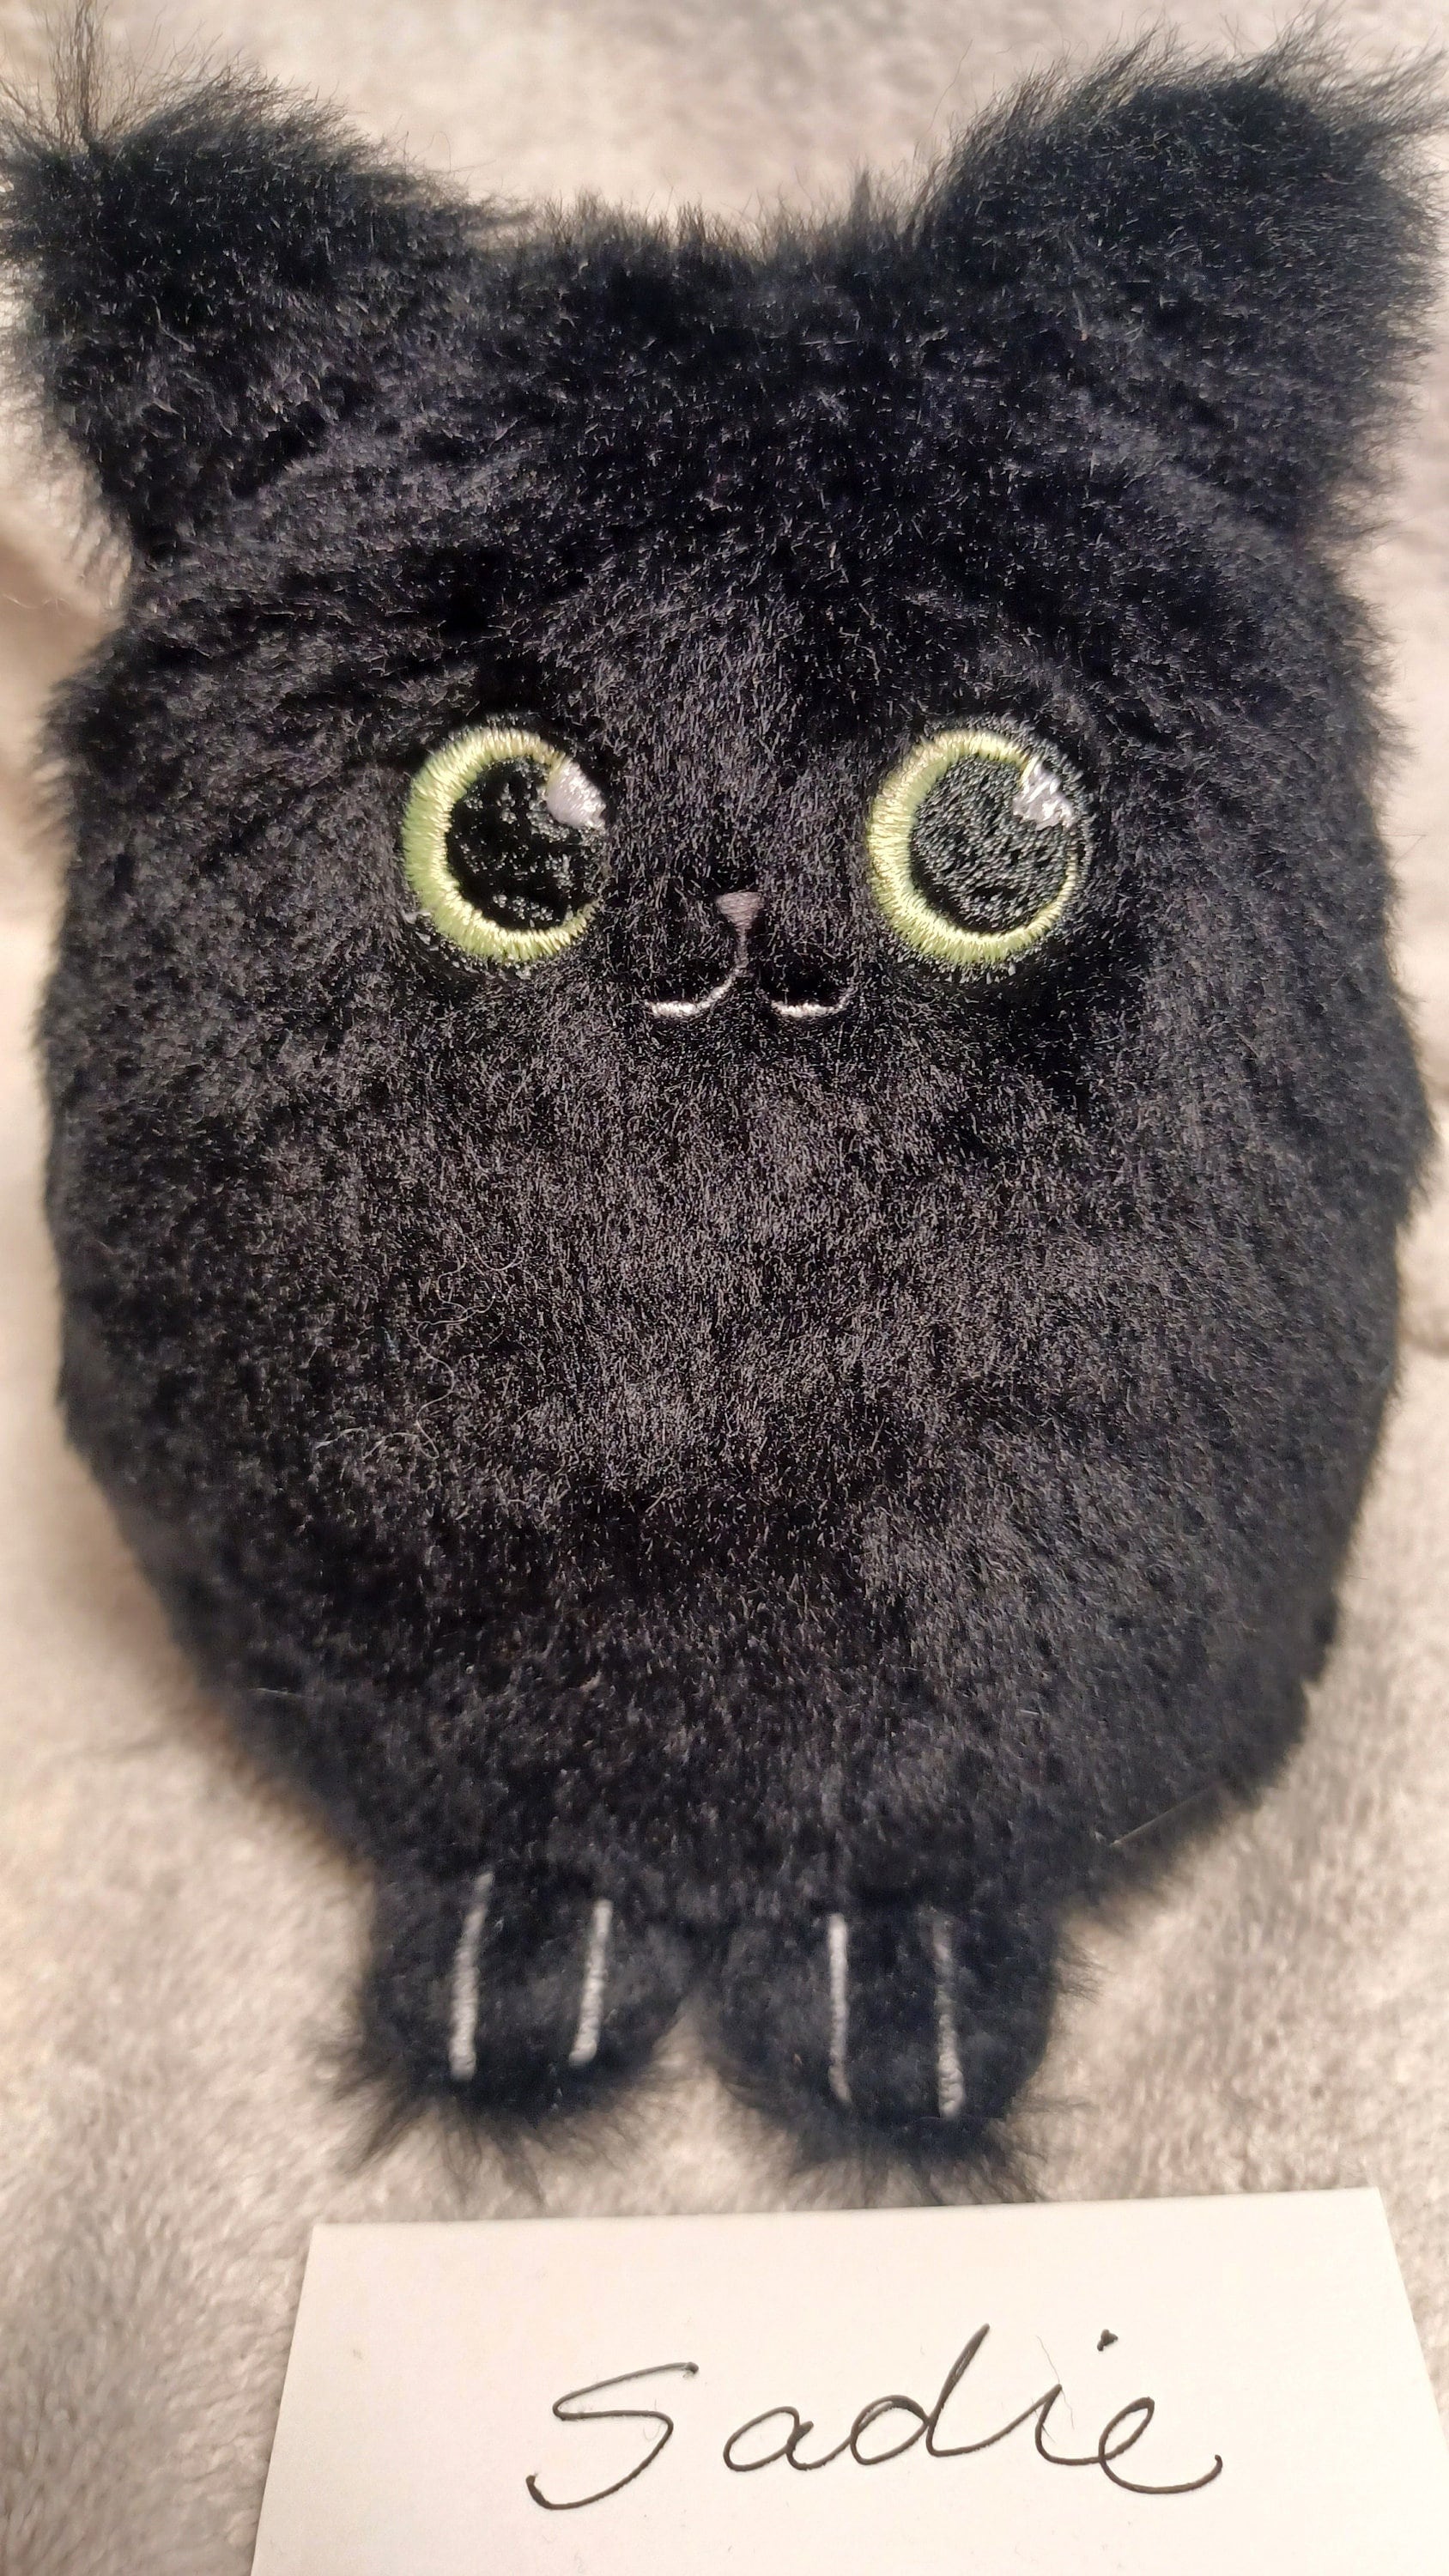 Nigel the Black Cat Plushie Toy Black Cat Stuffed Animal 